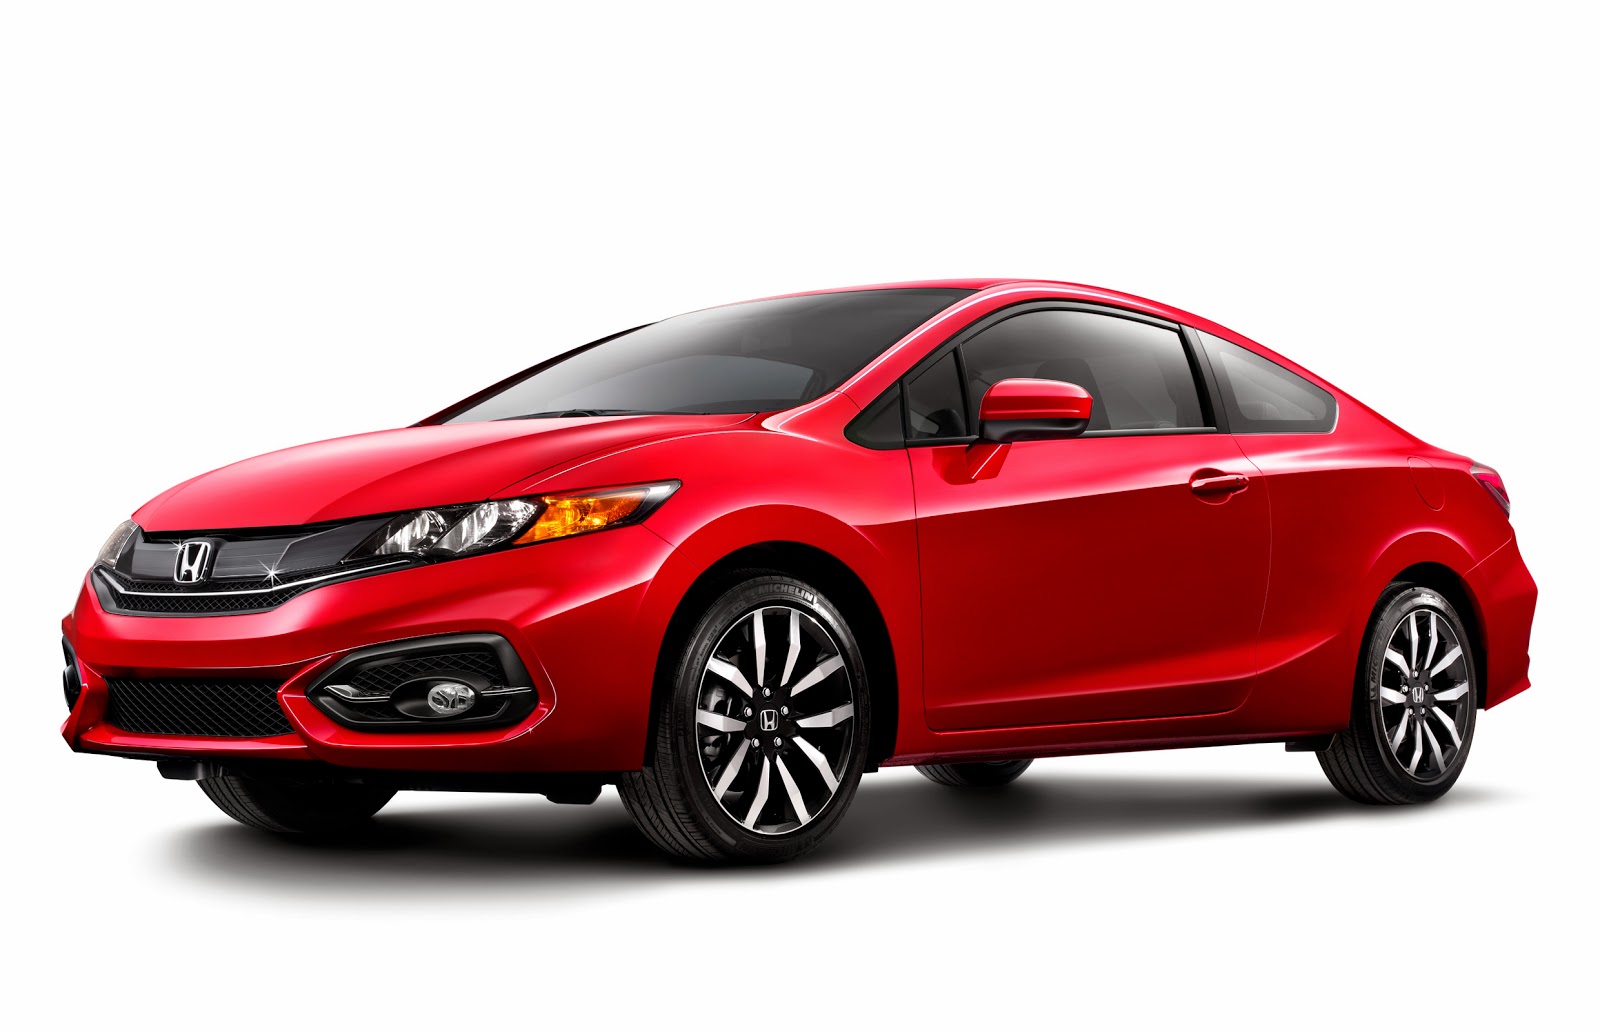 One Hundred Cars: New Car Honda Civic 2014